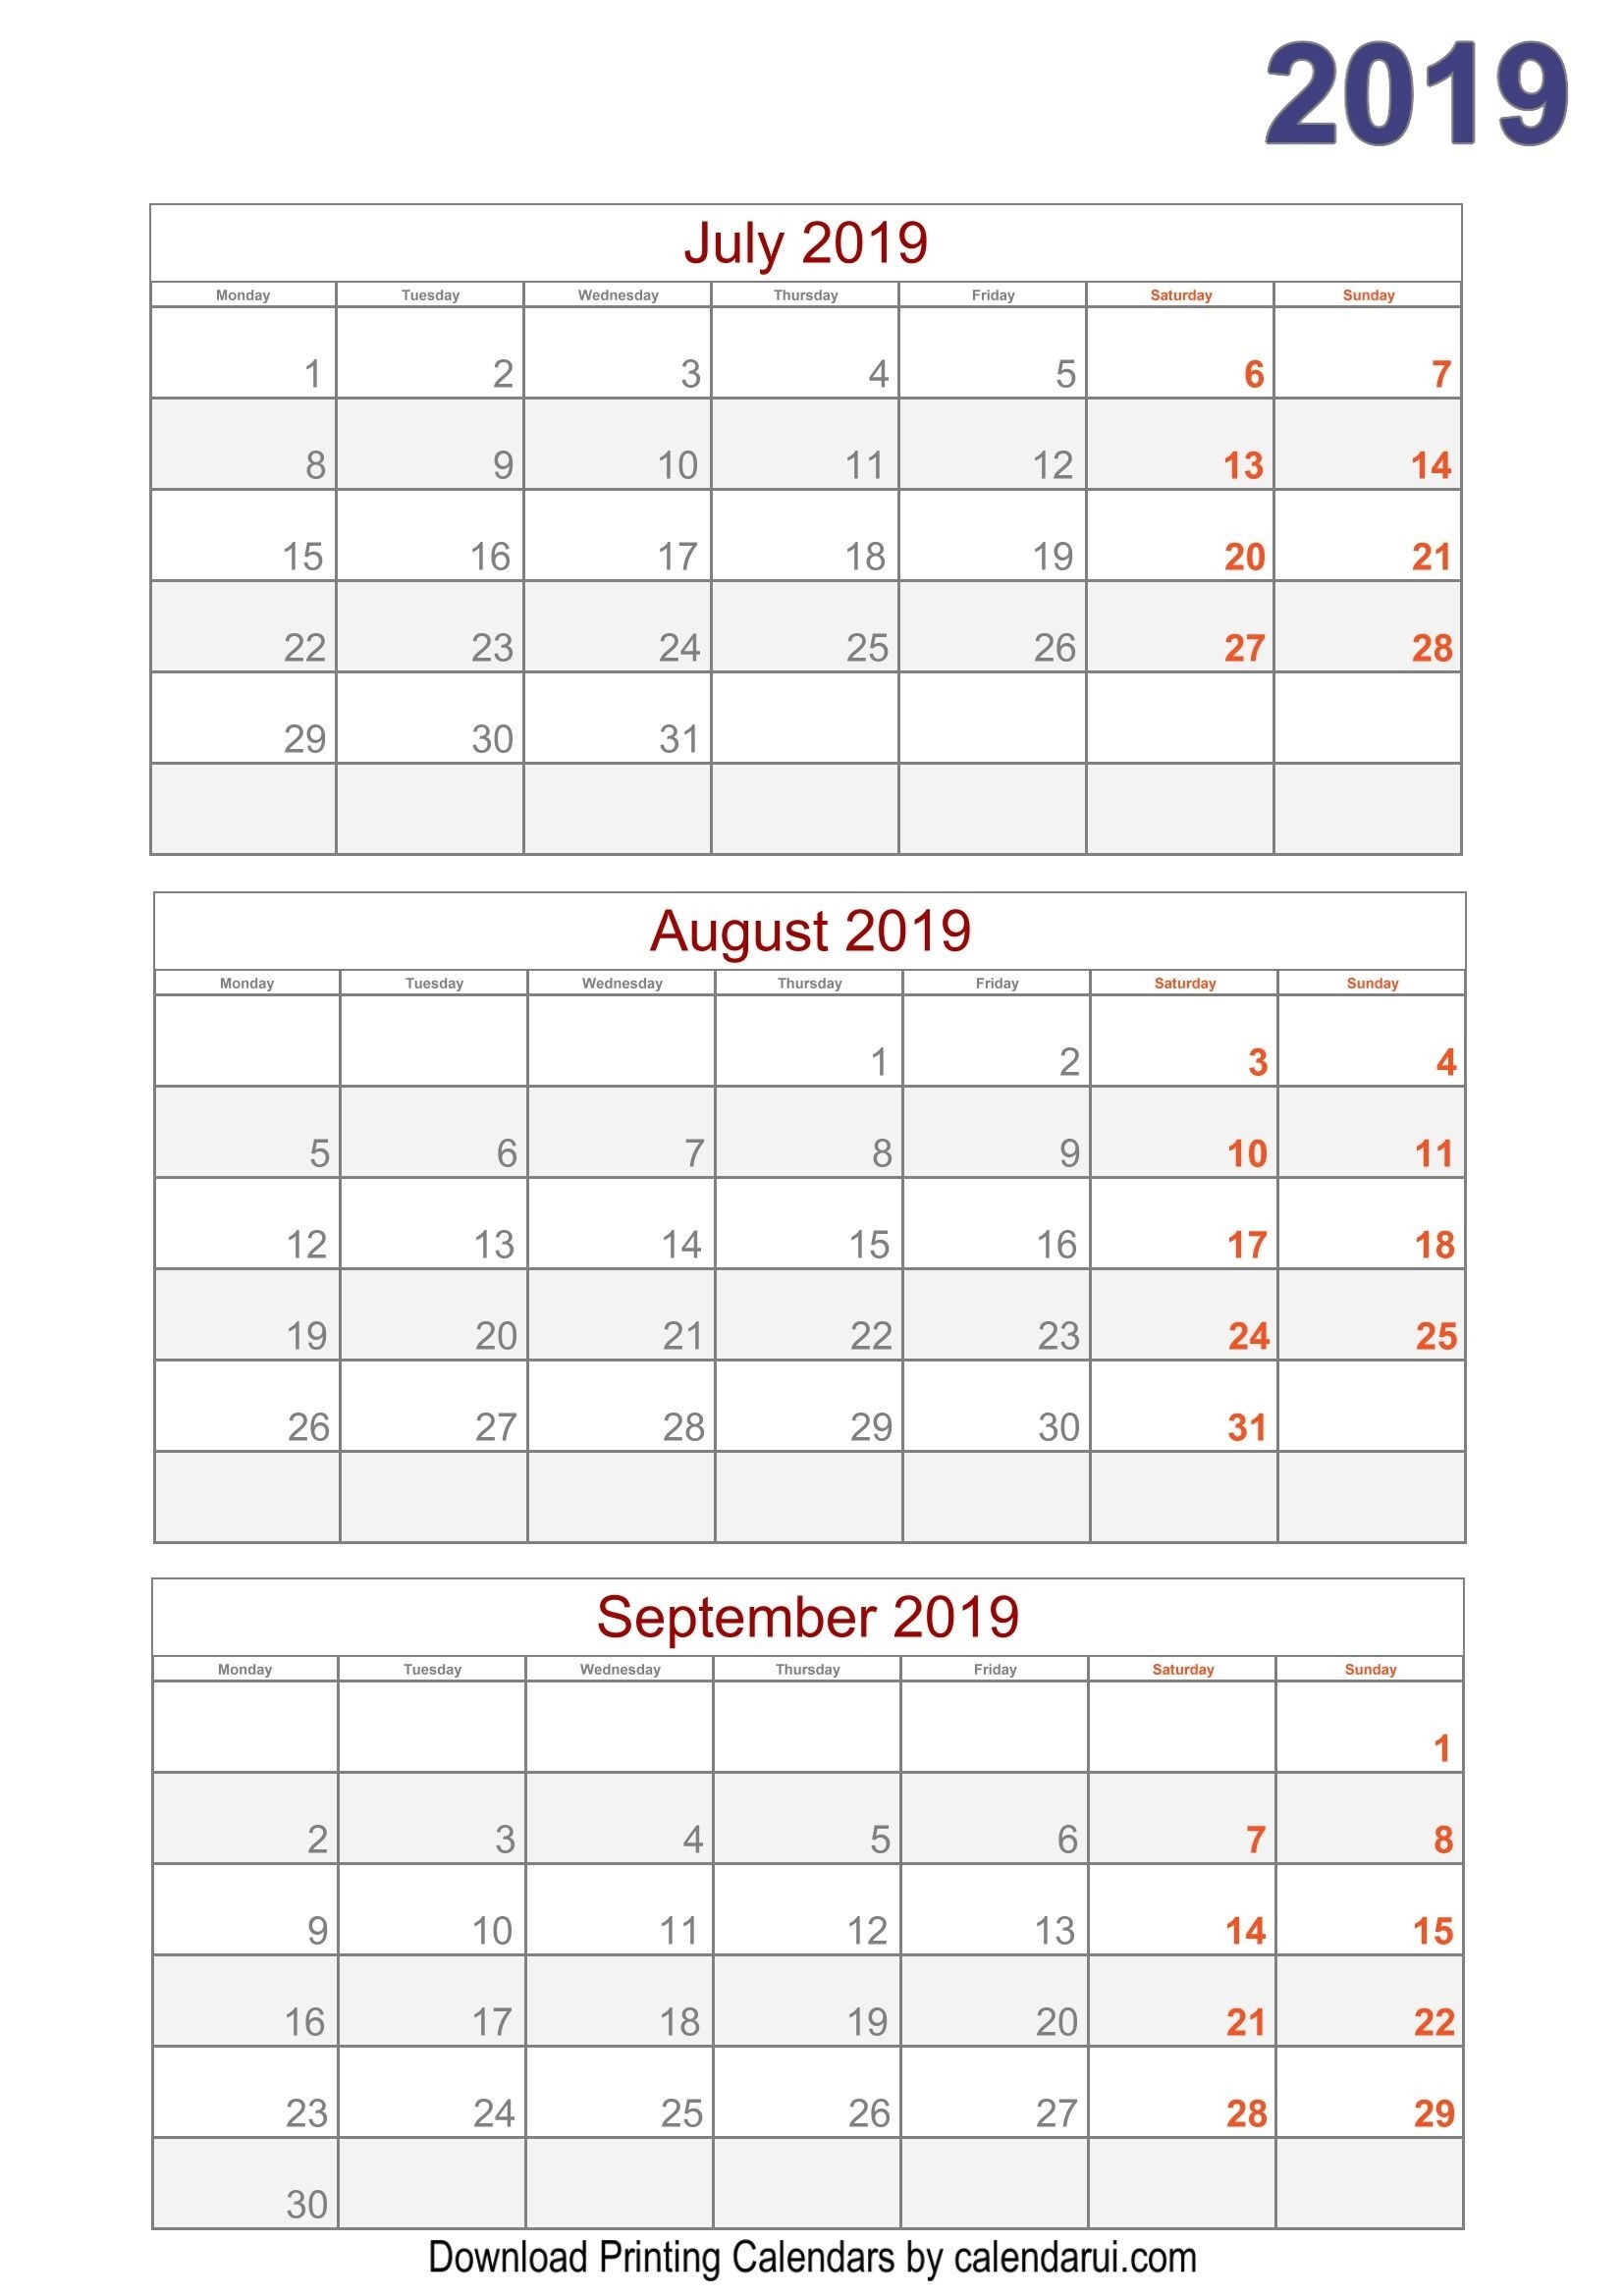 Download 2019 Quarterly Calendar Printable For Free-Blank Quarterly Printable Calendar